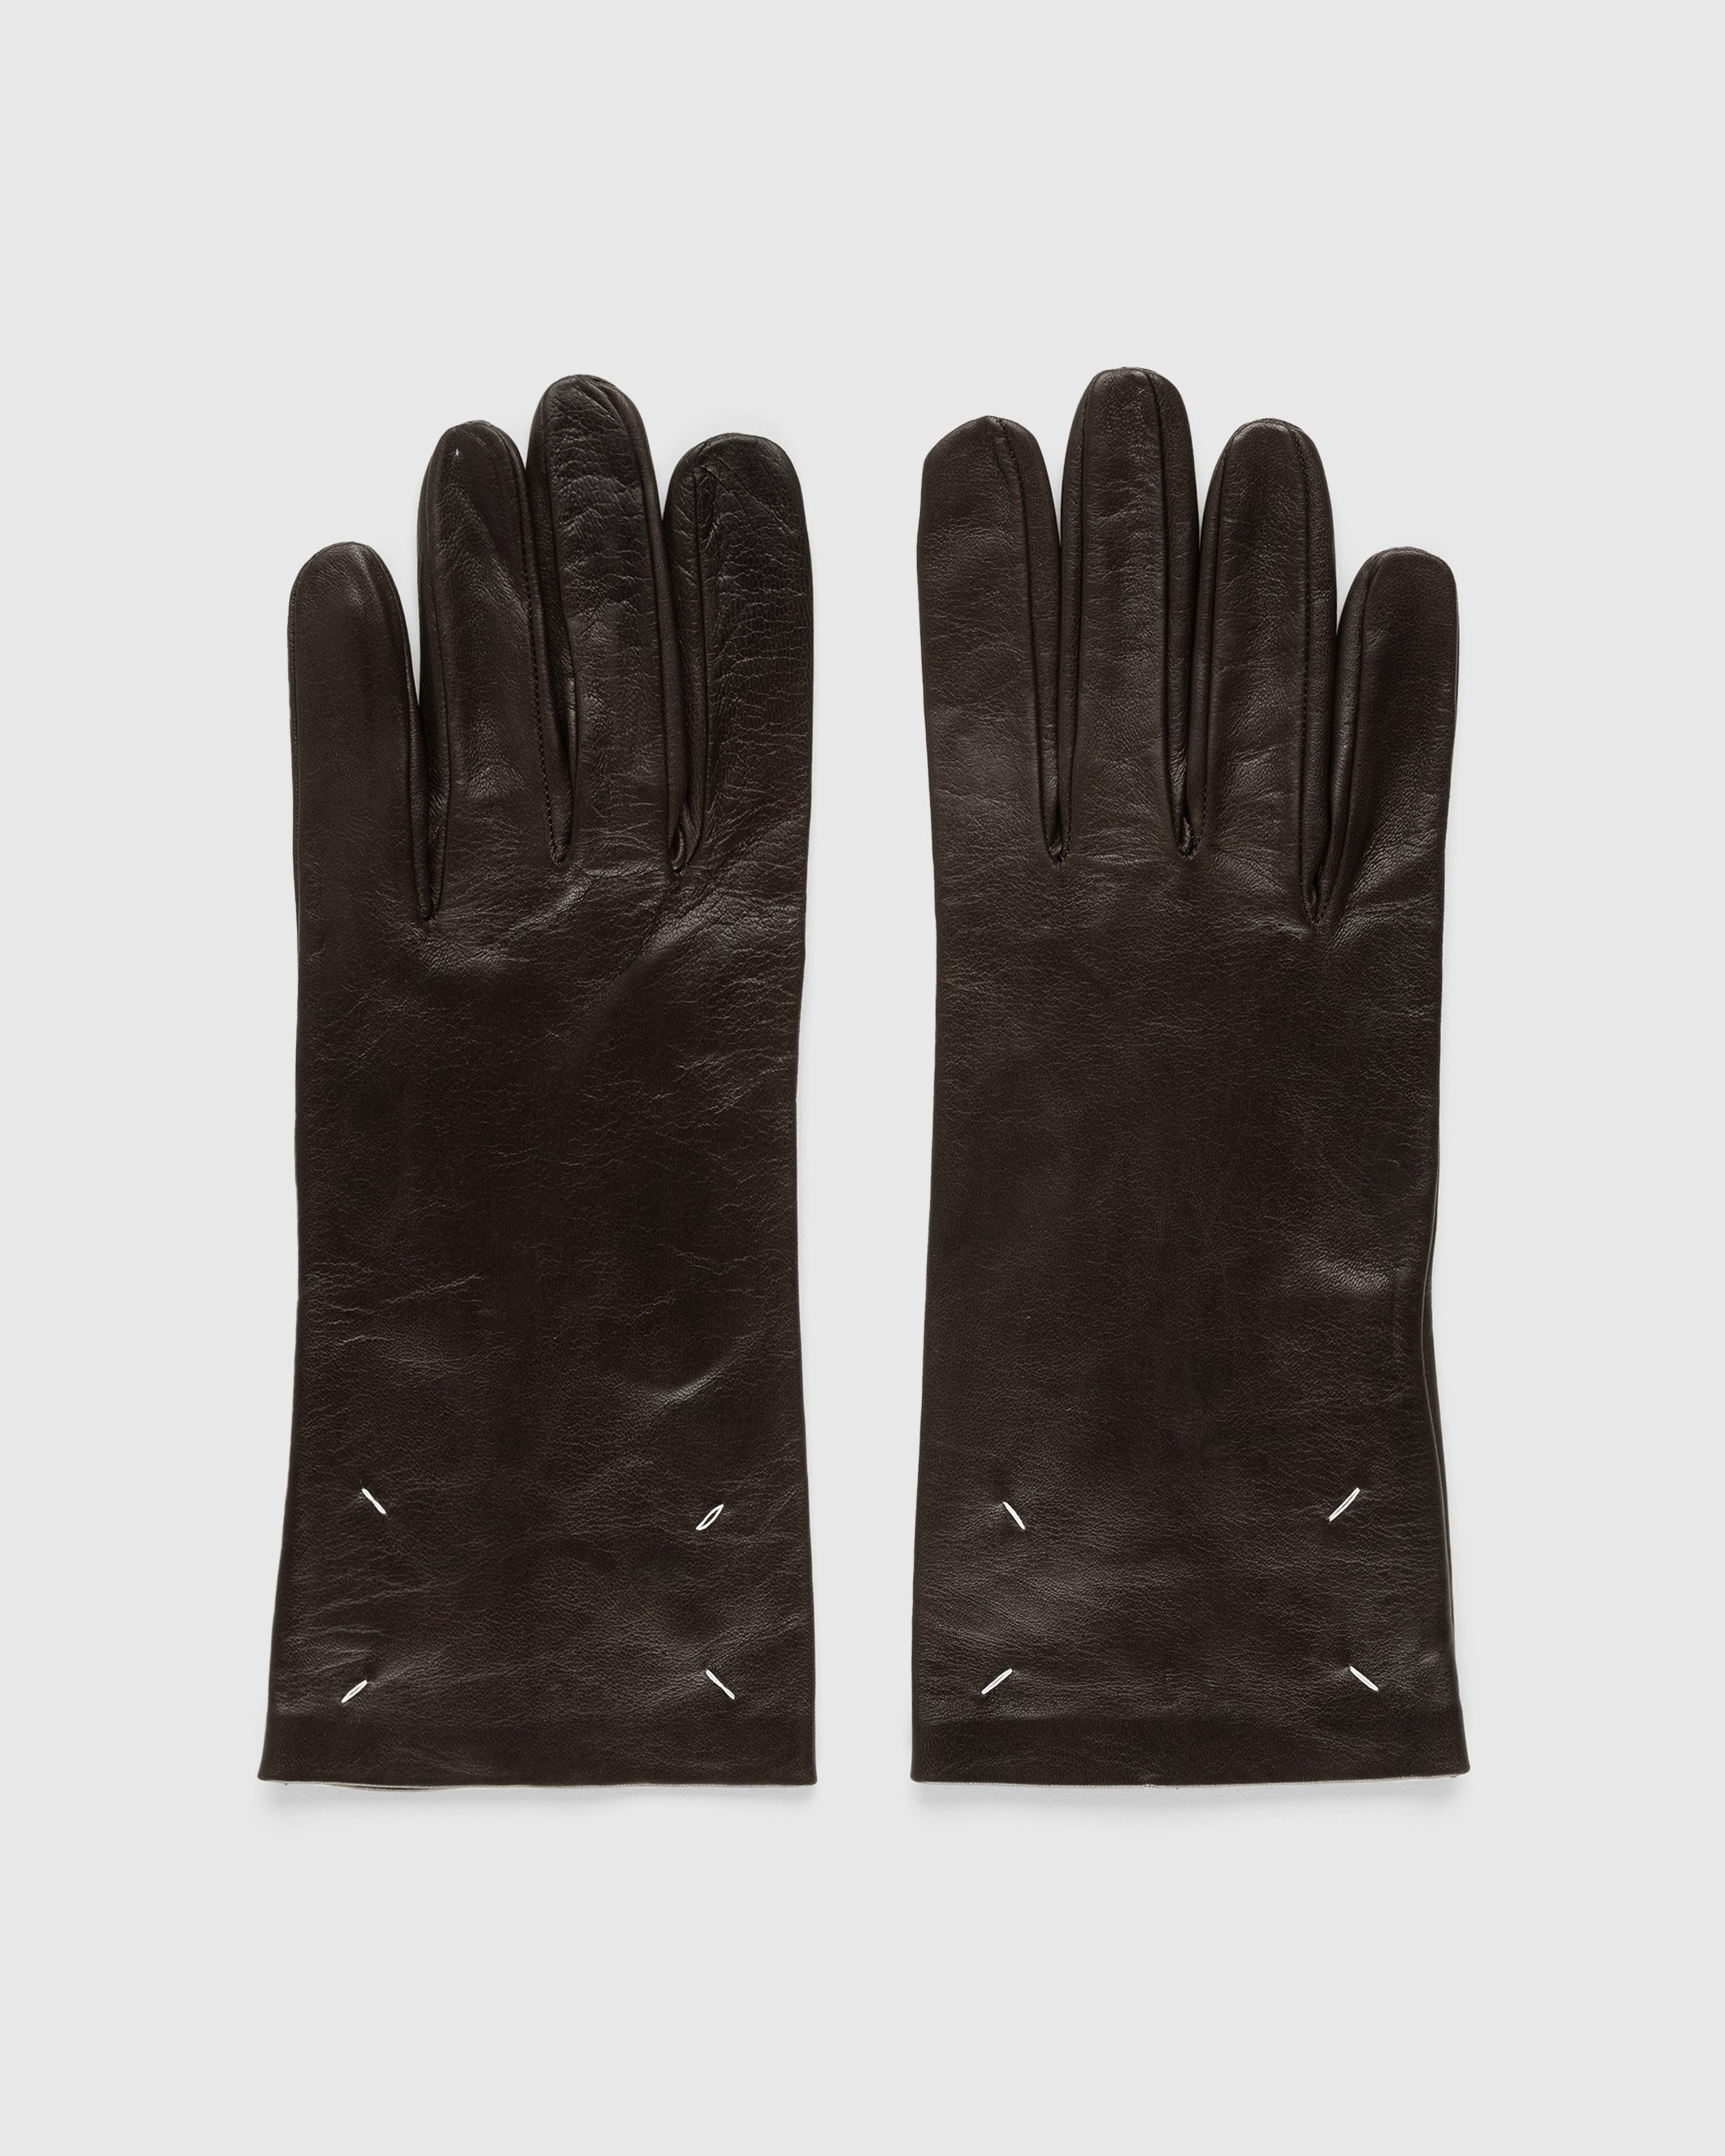 Maison Margiela – Nappa Leather Gloves Chocolate | Highsnobiety Shop